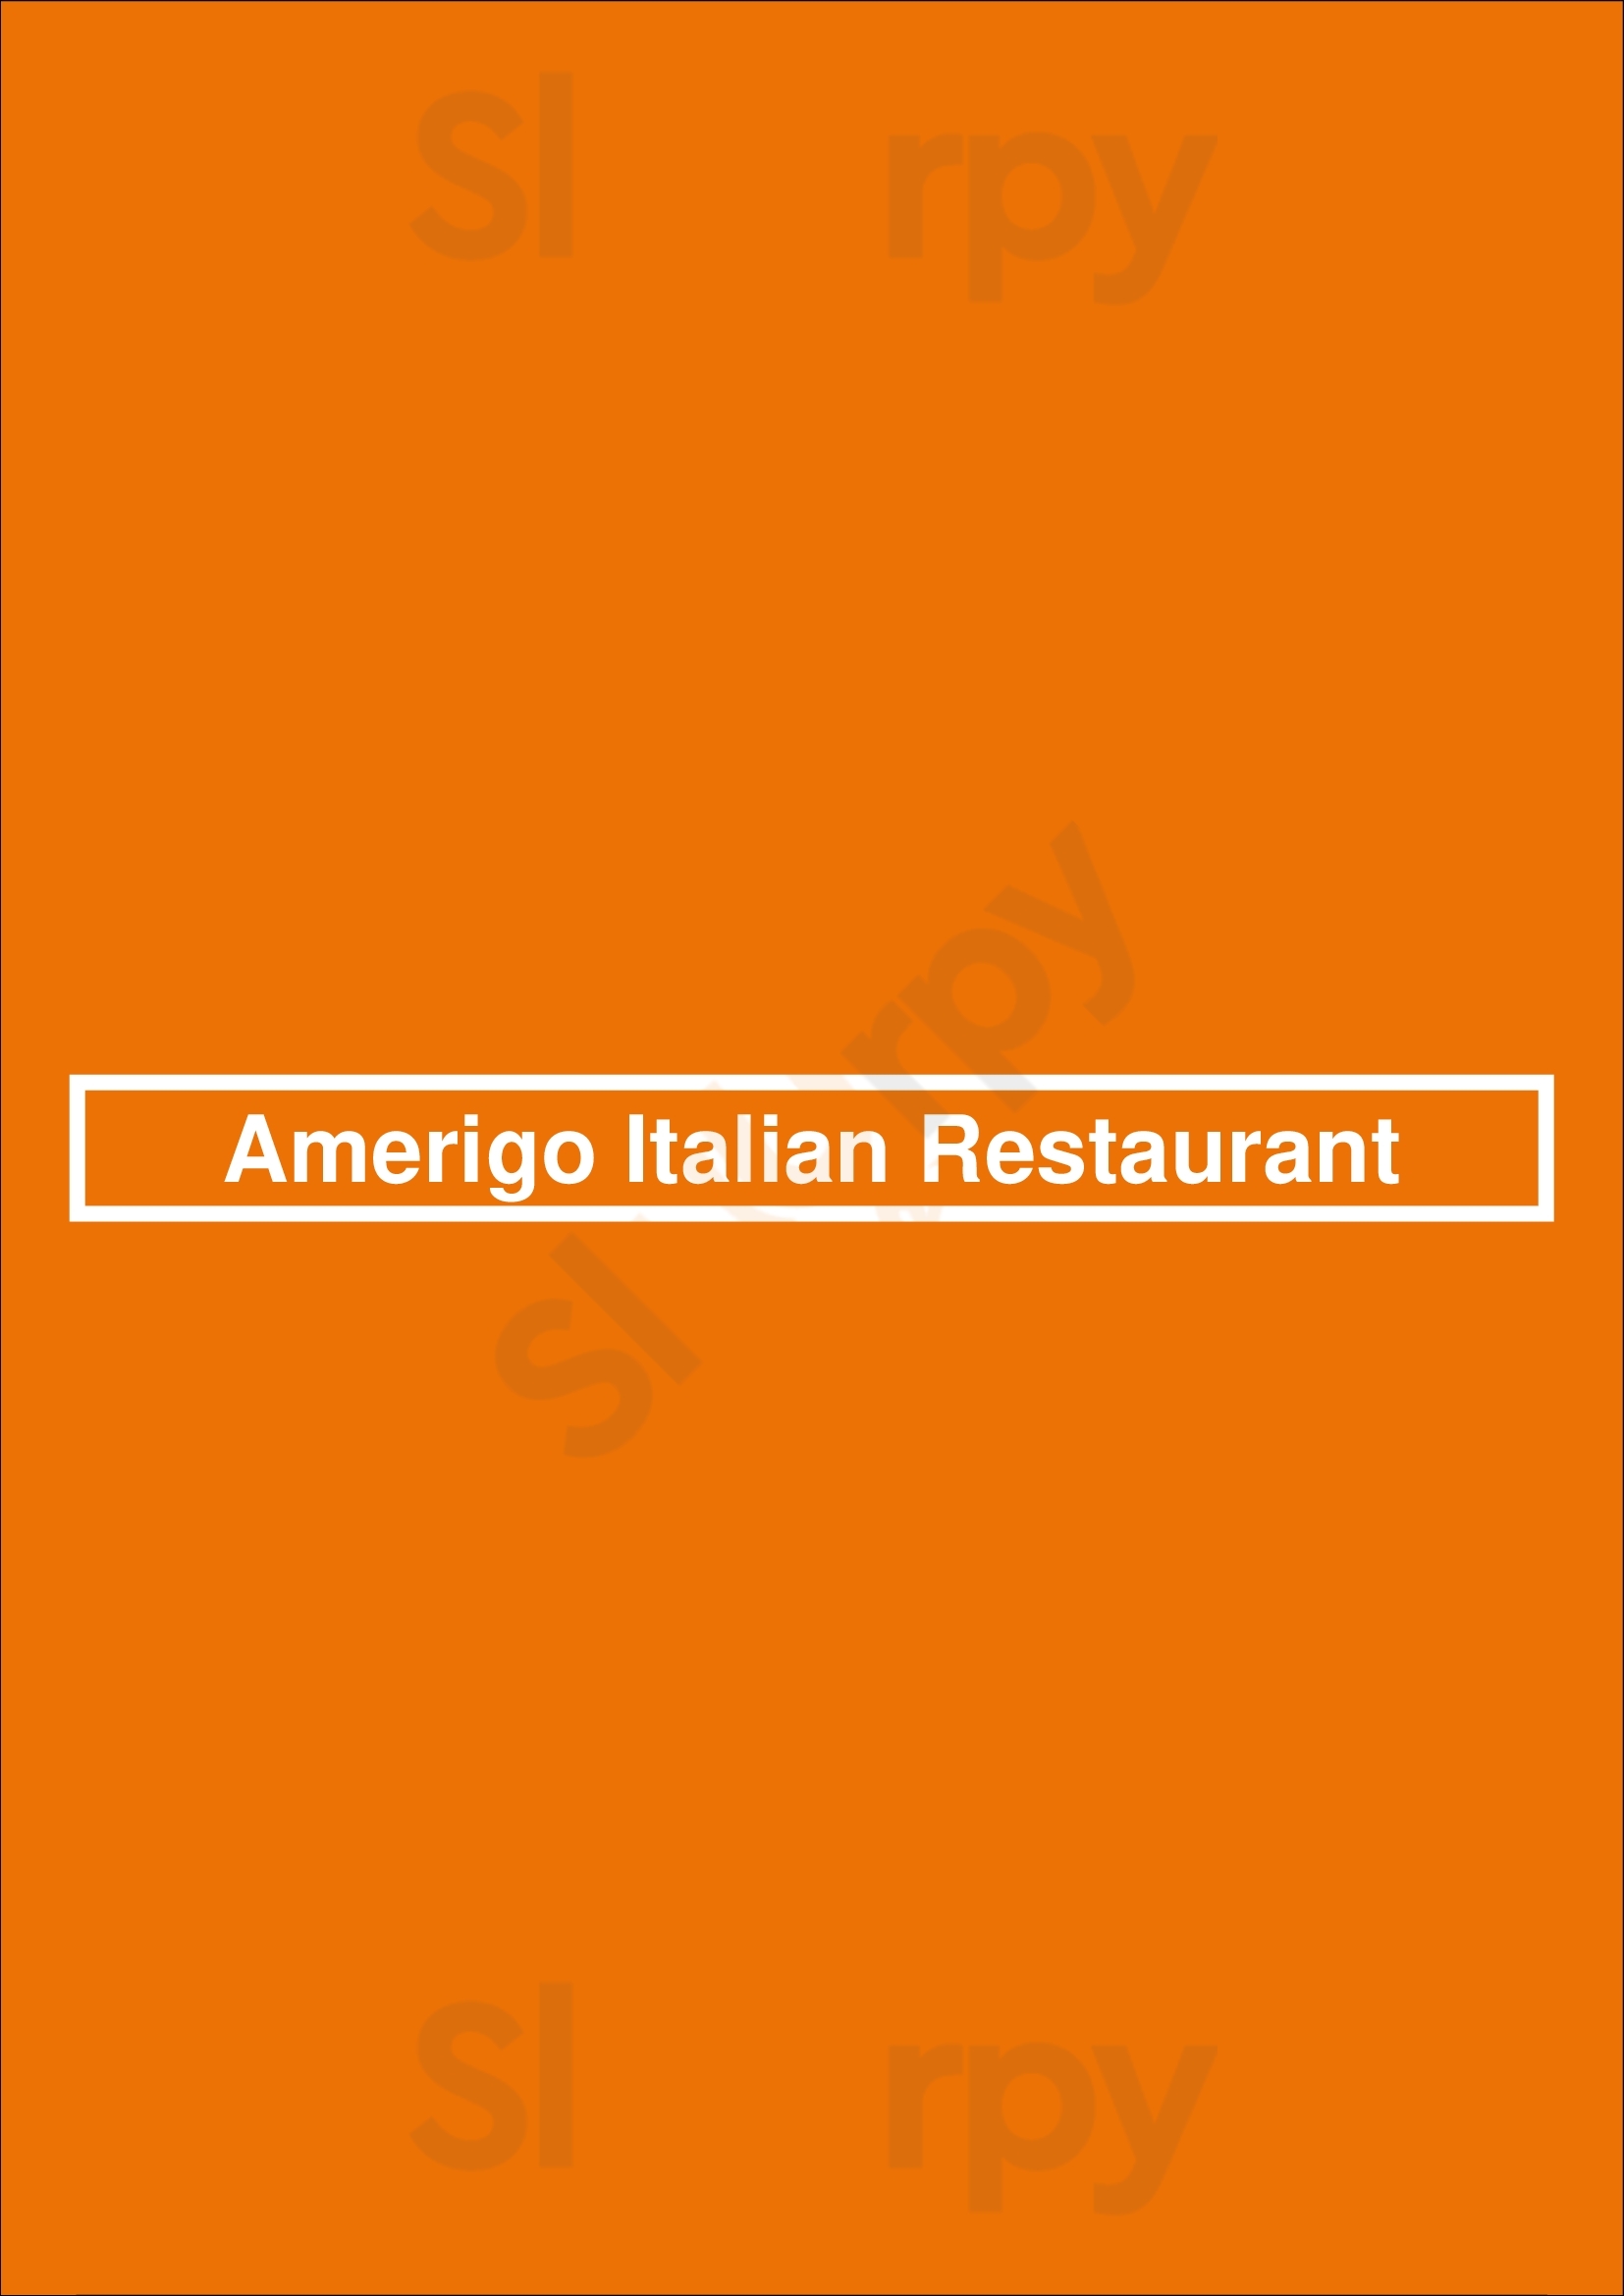 Amerigo Italian Restaurant Nashville Menu - 1